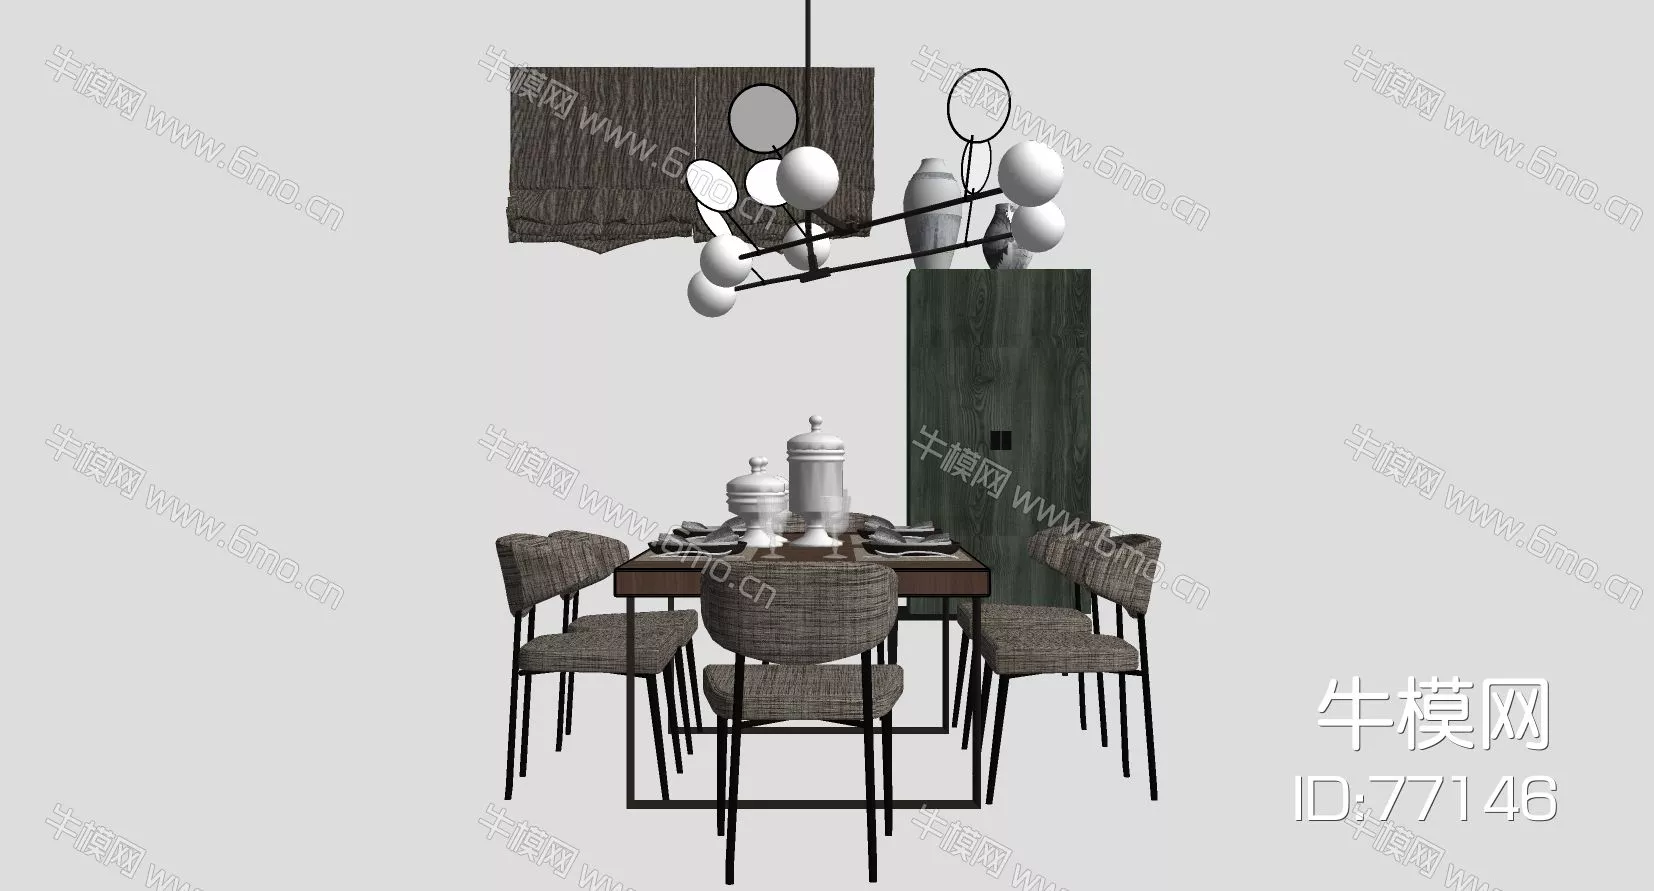 NORDIC DINING TABLE SET - SKETCHUP 3D MODEL - ENSCAPE - 77146